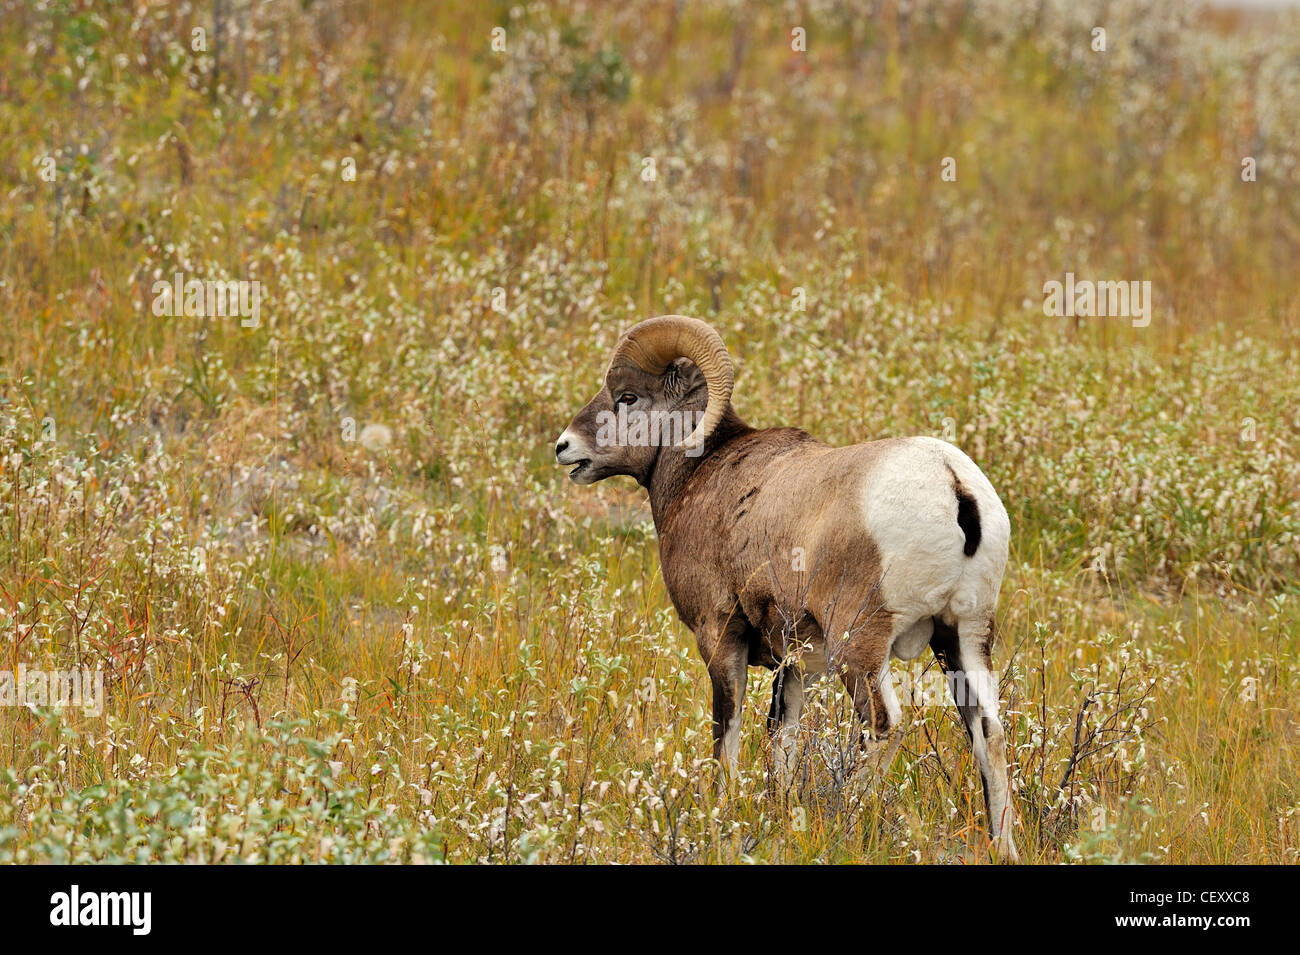 A rocky mountain bighorn sheep in autumn grass. Stock Photo